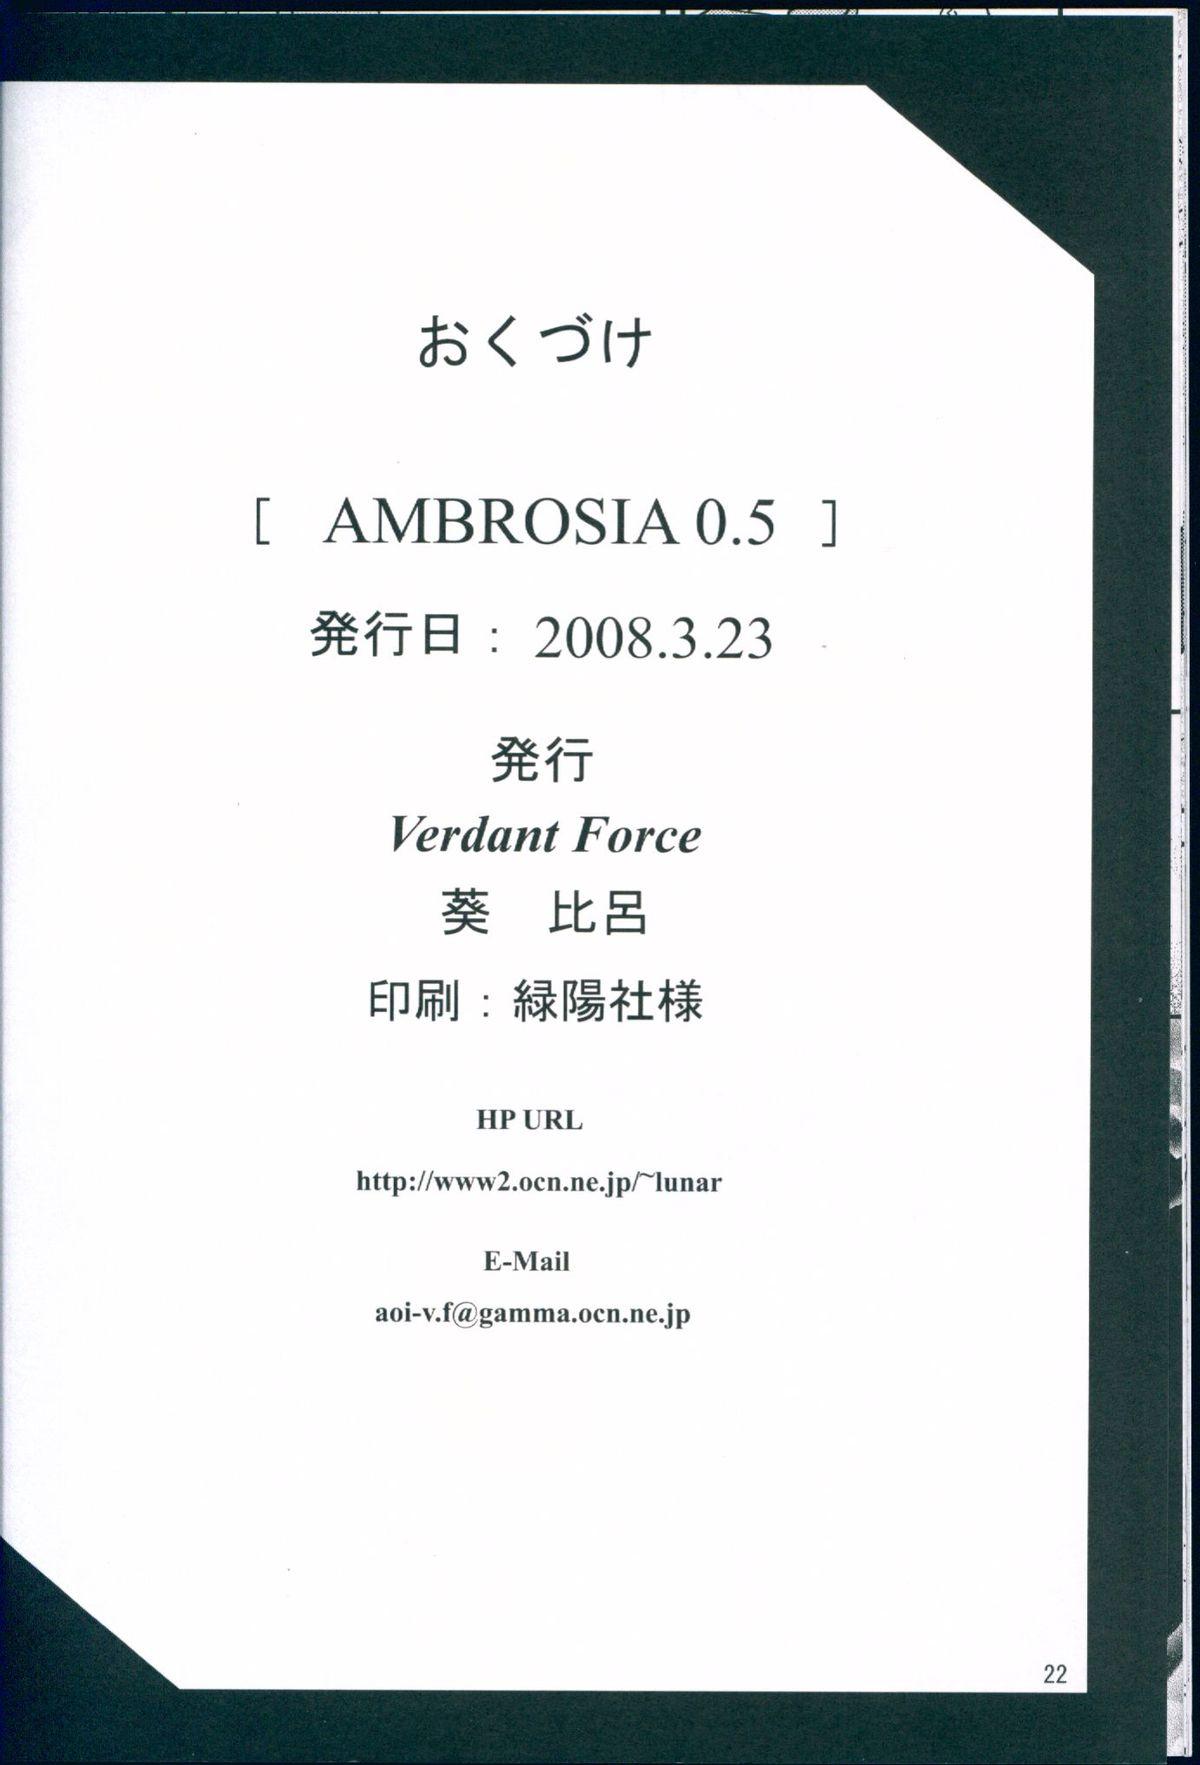 AMBROSIA 0.5 21